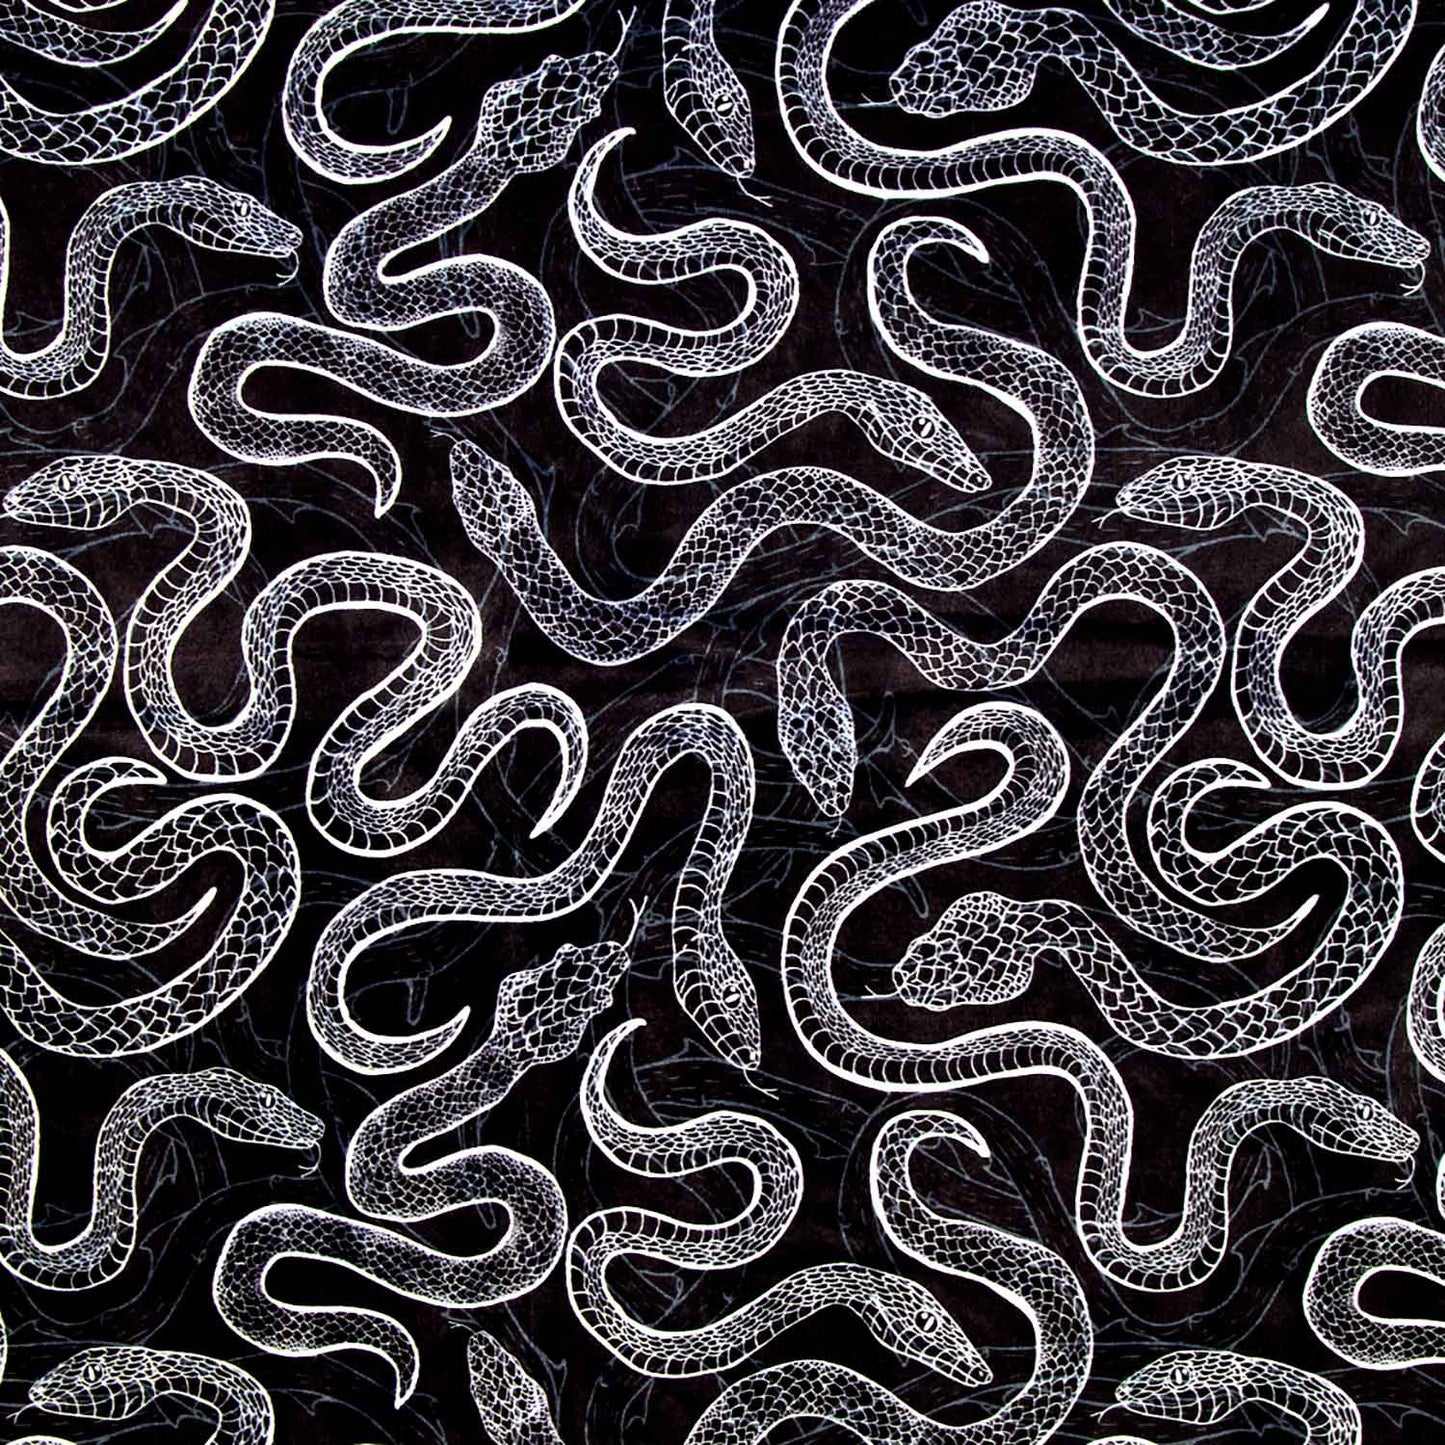 Cuddle® Prints - Slithery Snake Black Digitally Printed Yardage Primary Image